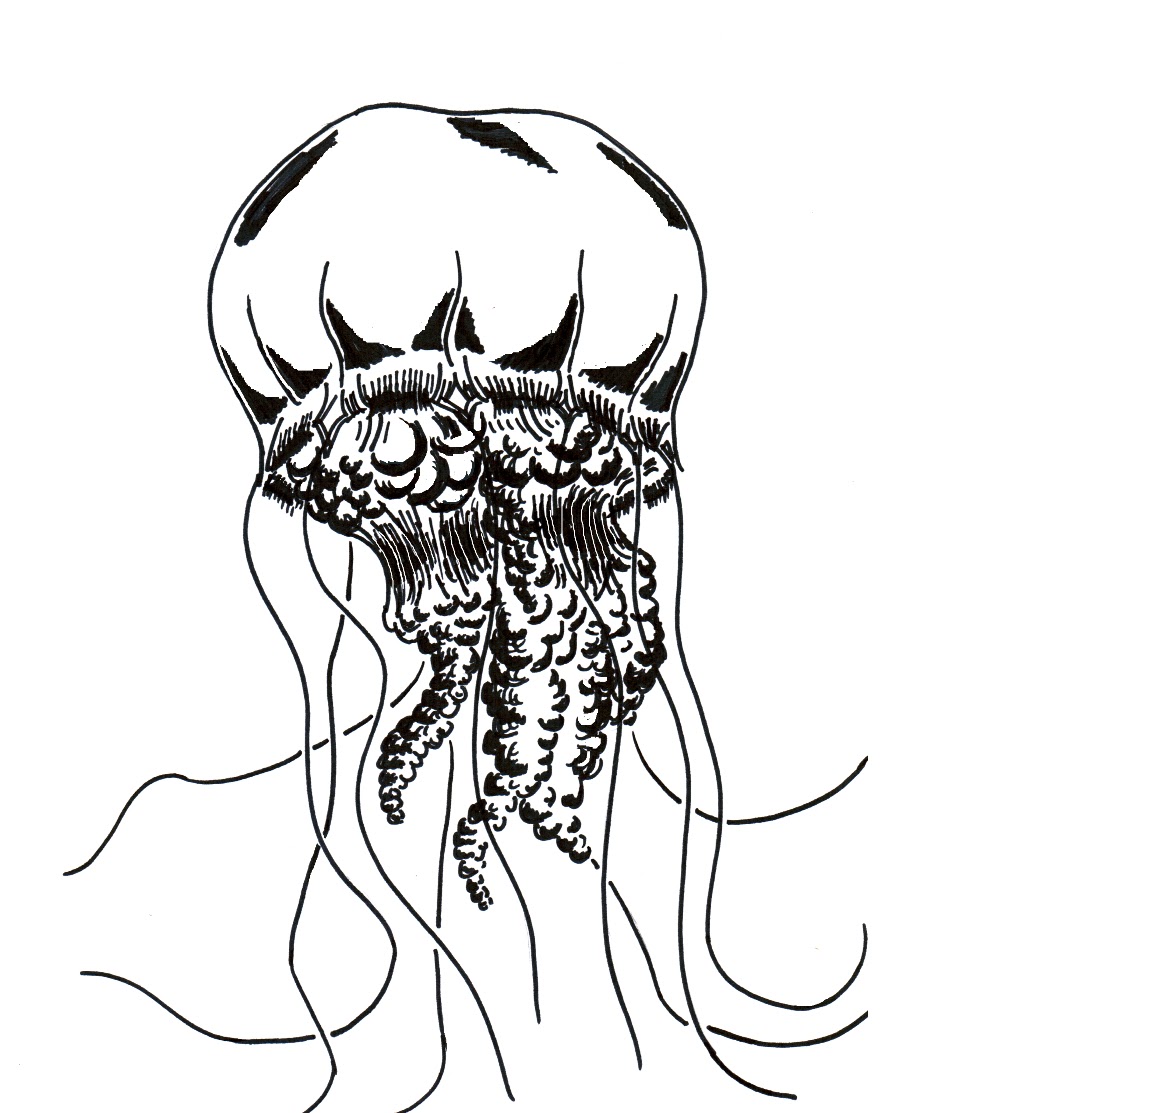 Chuck Does Art: Jellyfish